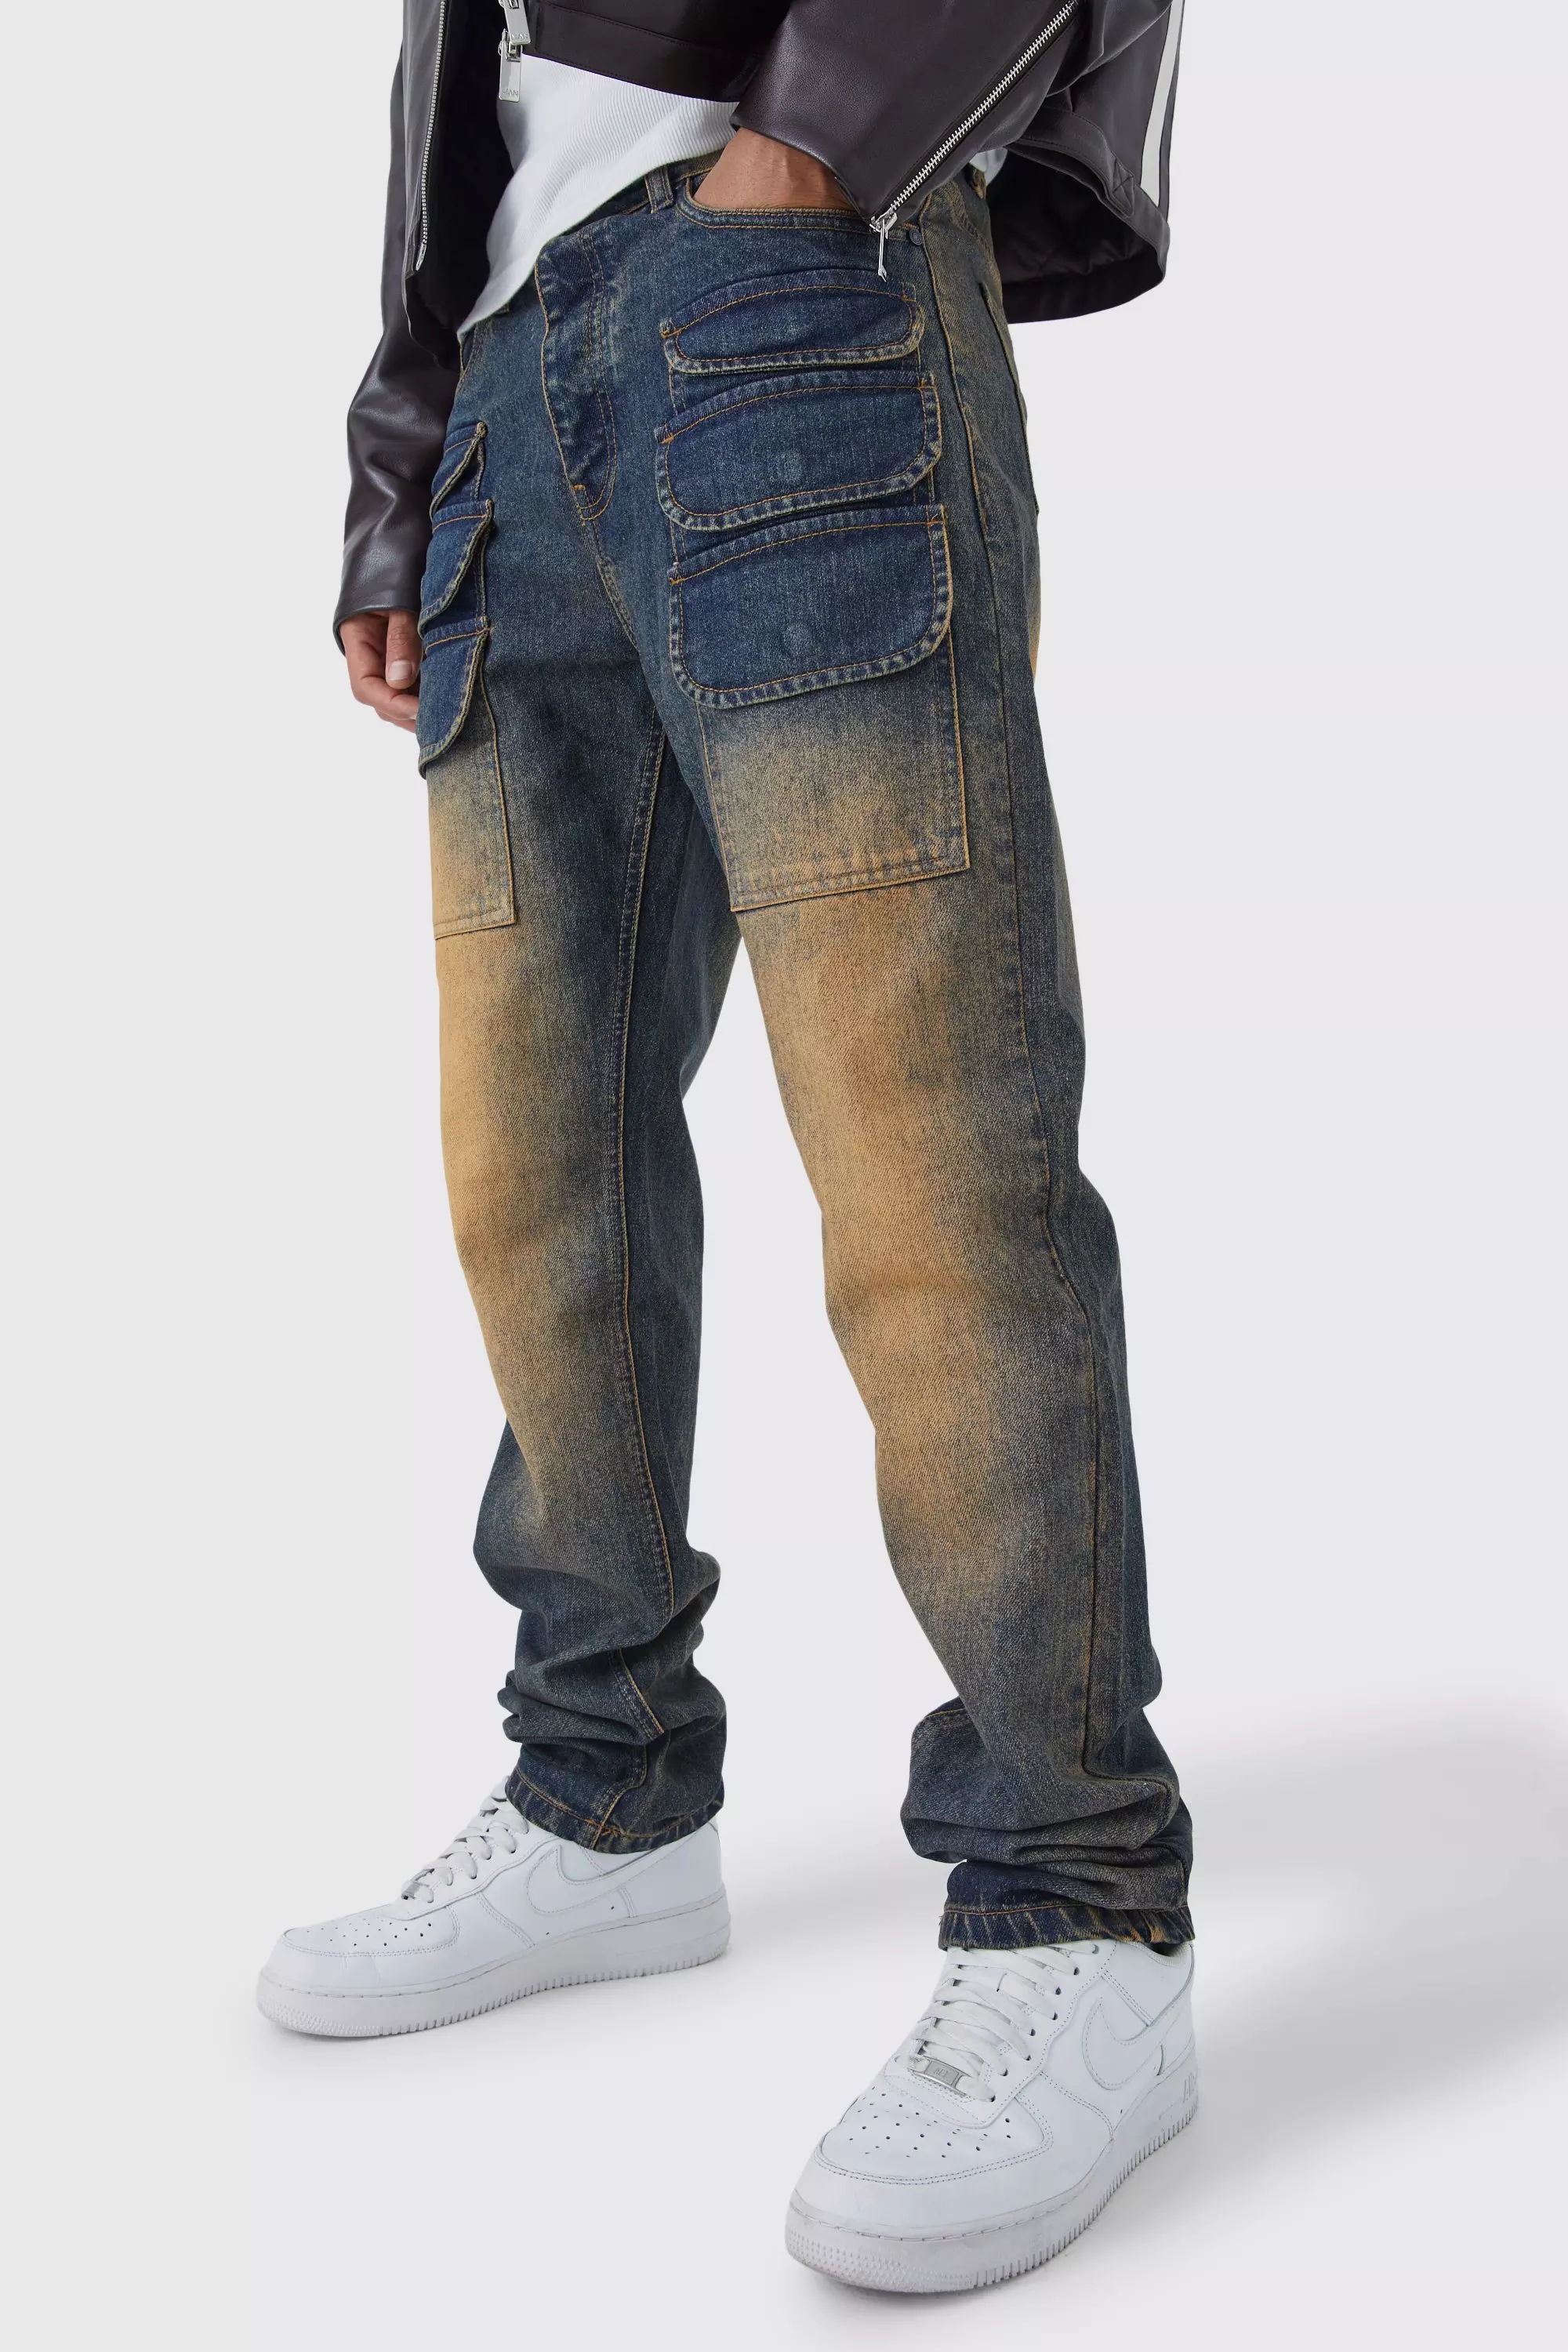 Ash Grey Tall Straight Rigid Ripped Tinted Cargo Jean